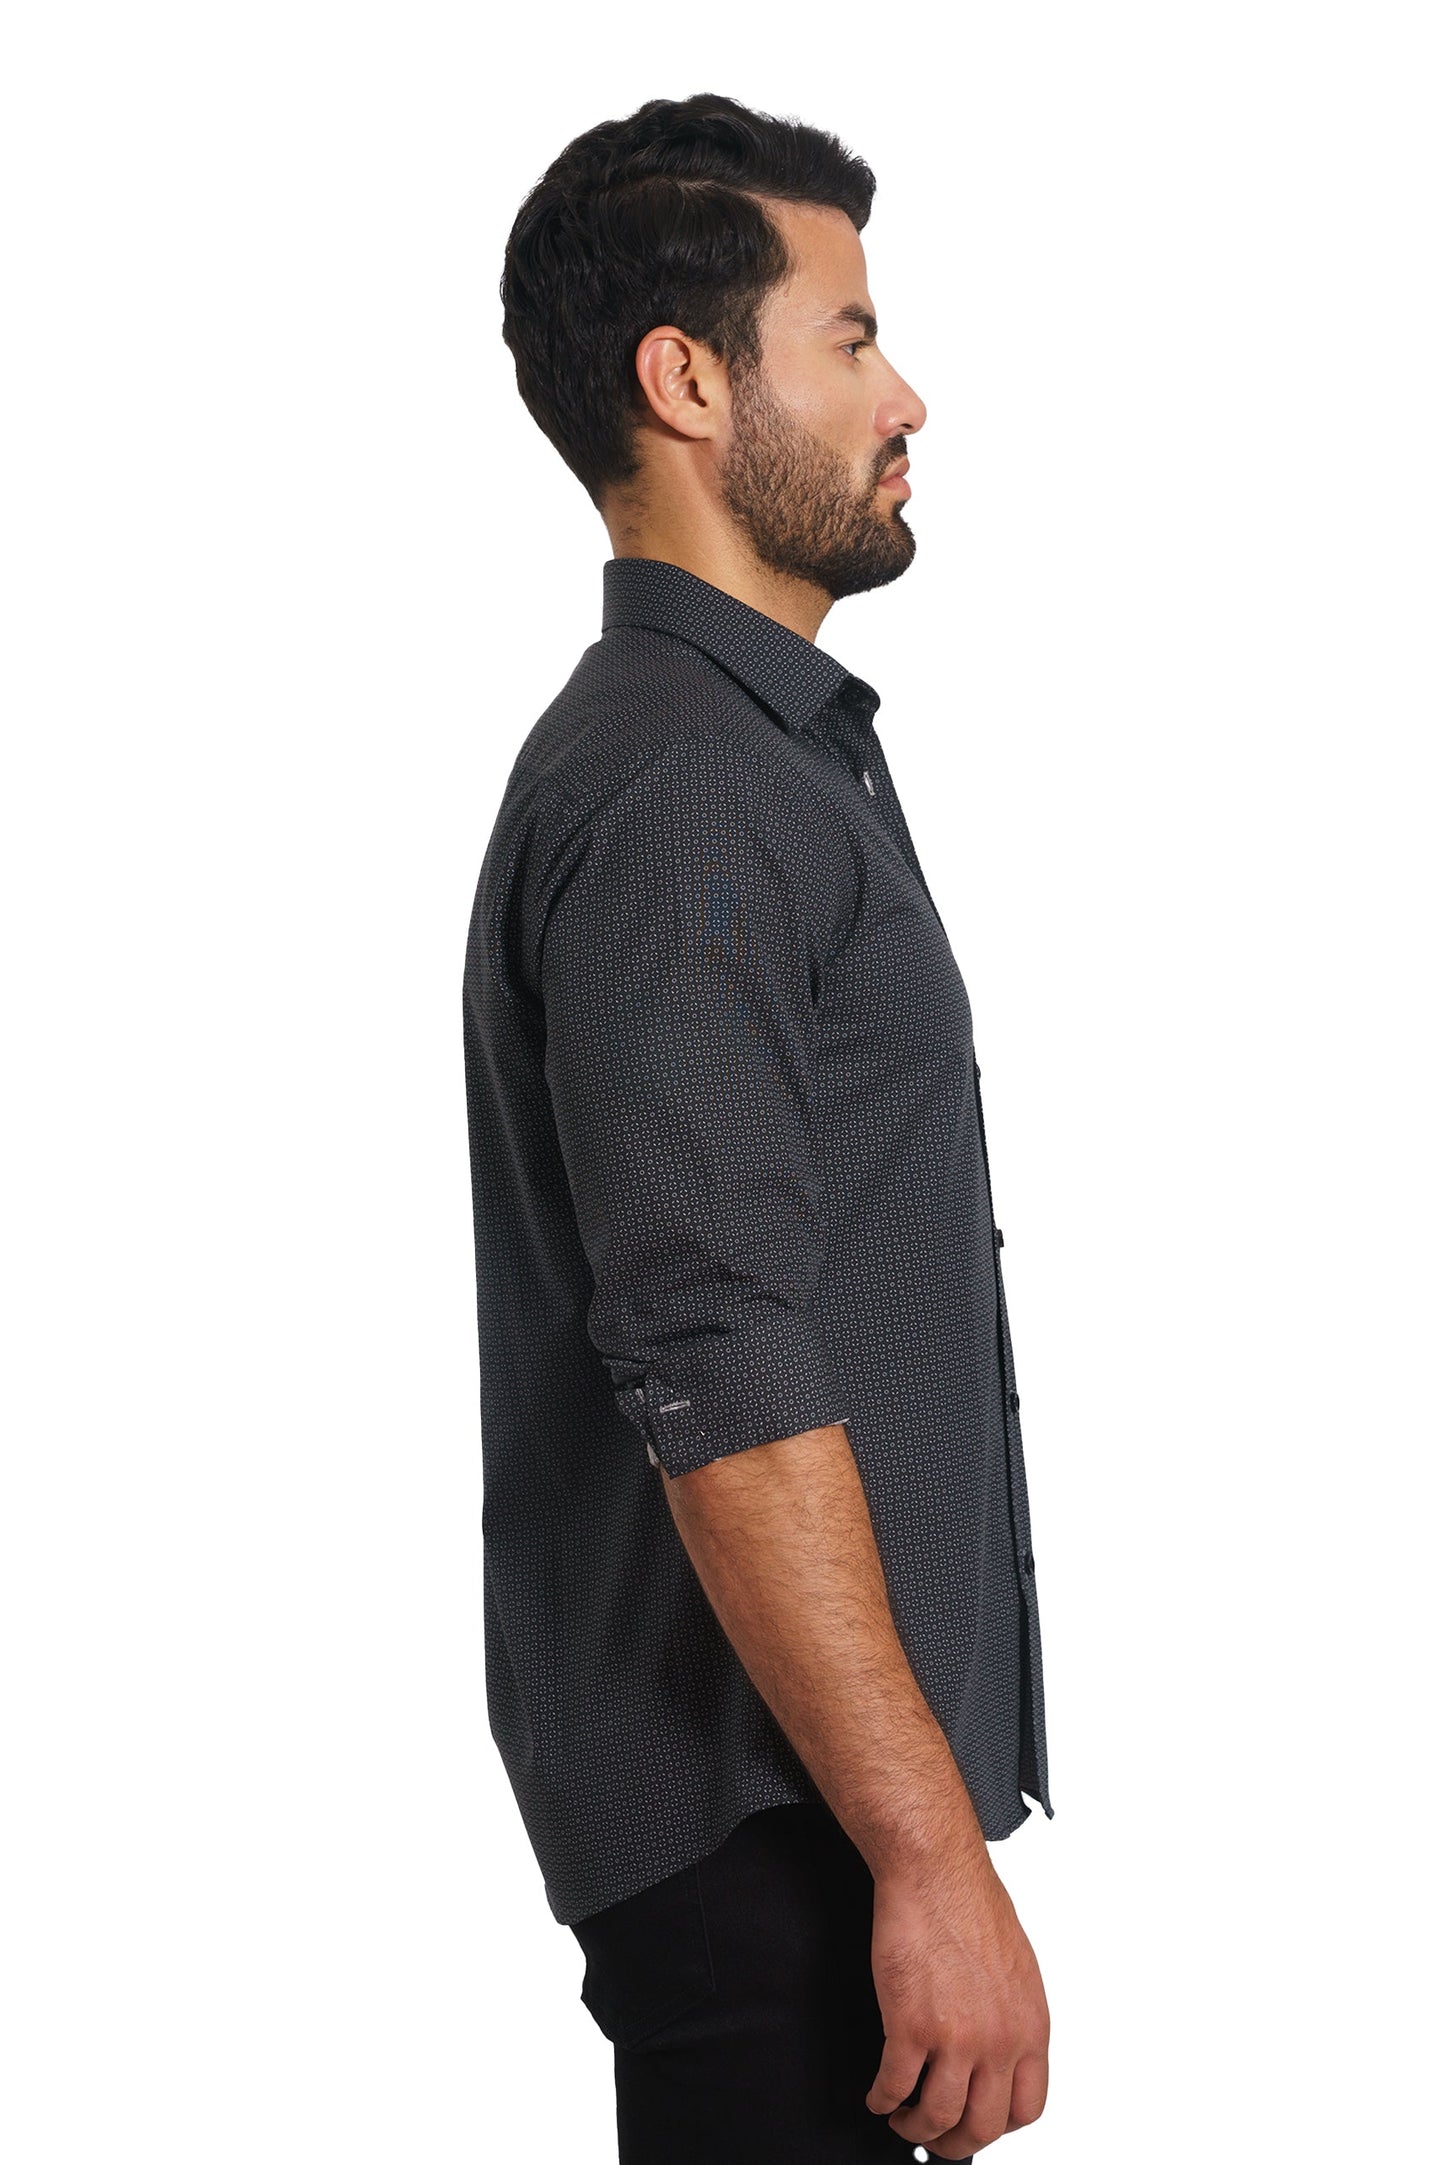 Black Long Sleeve Shirt TH-2854 Side